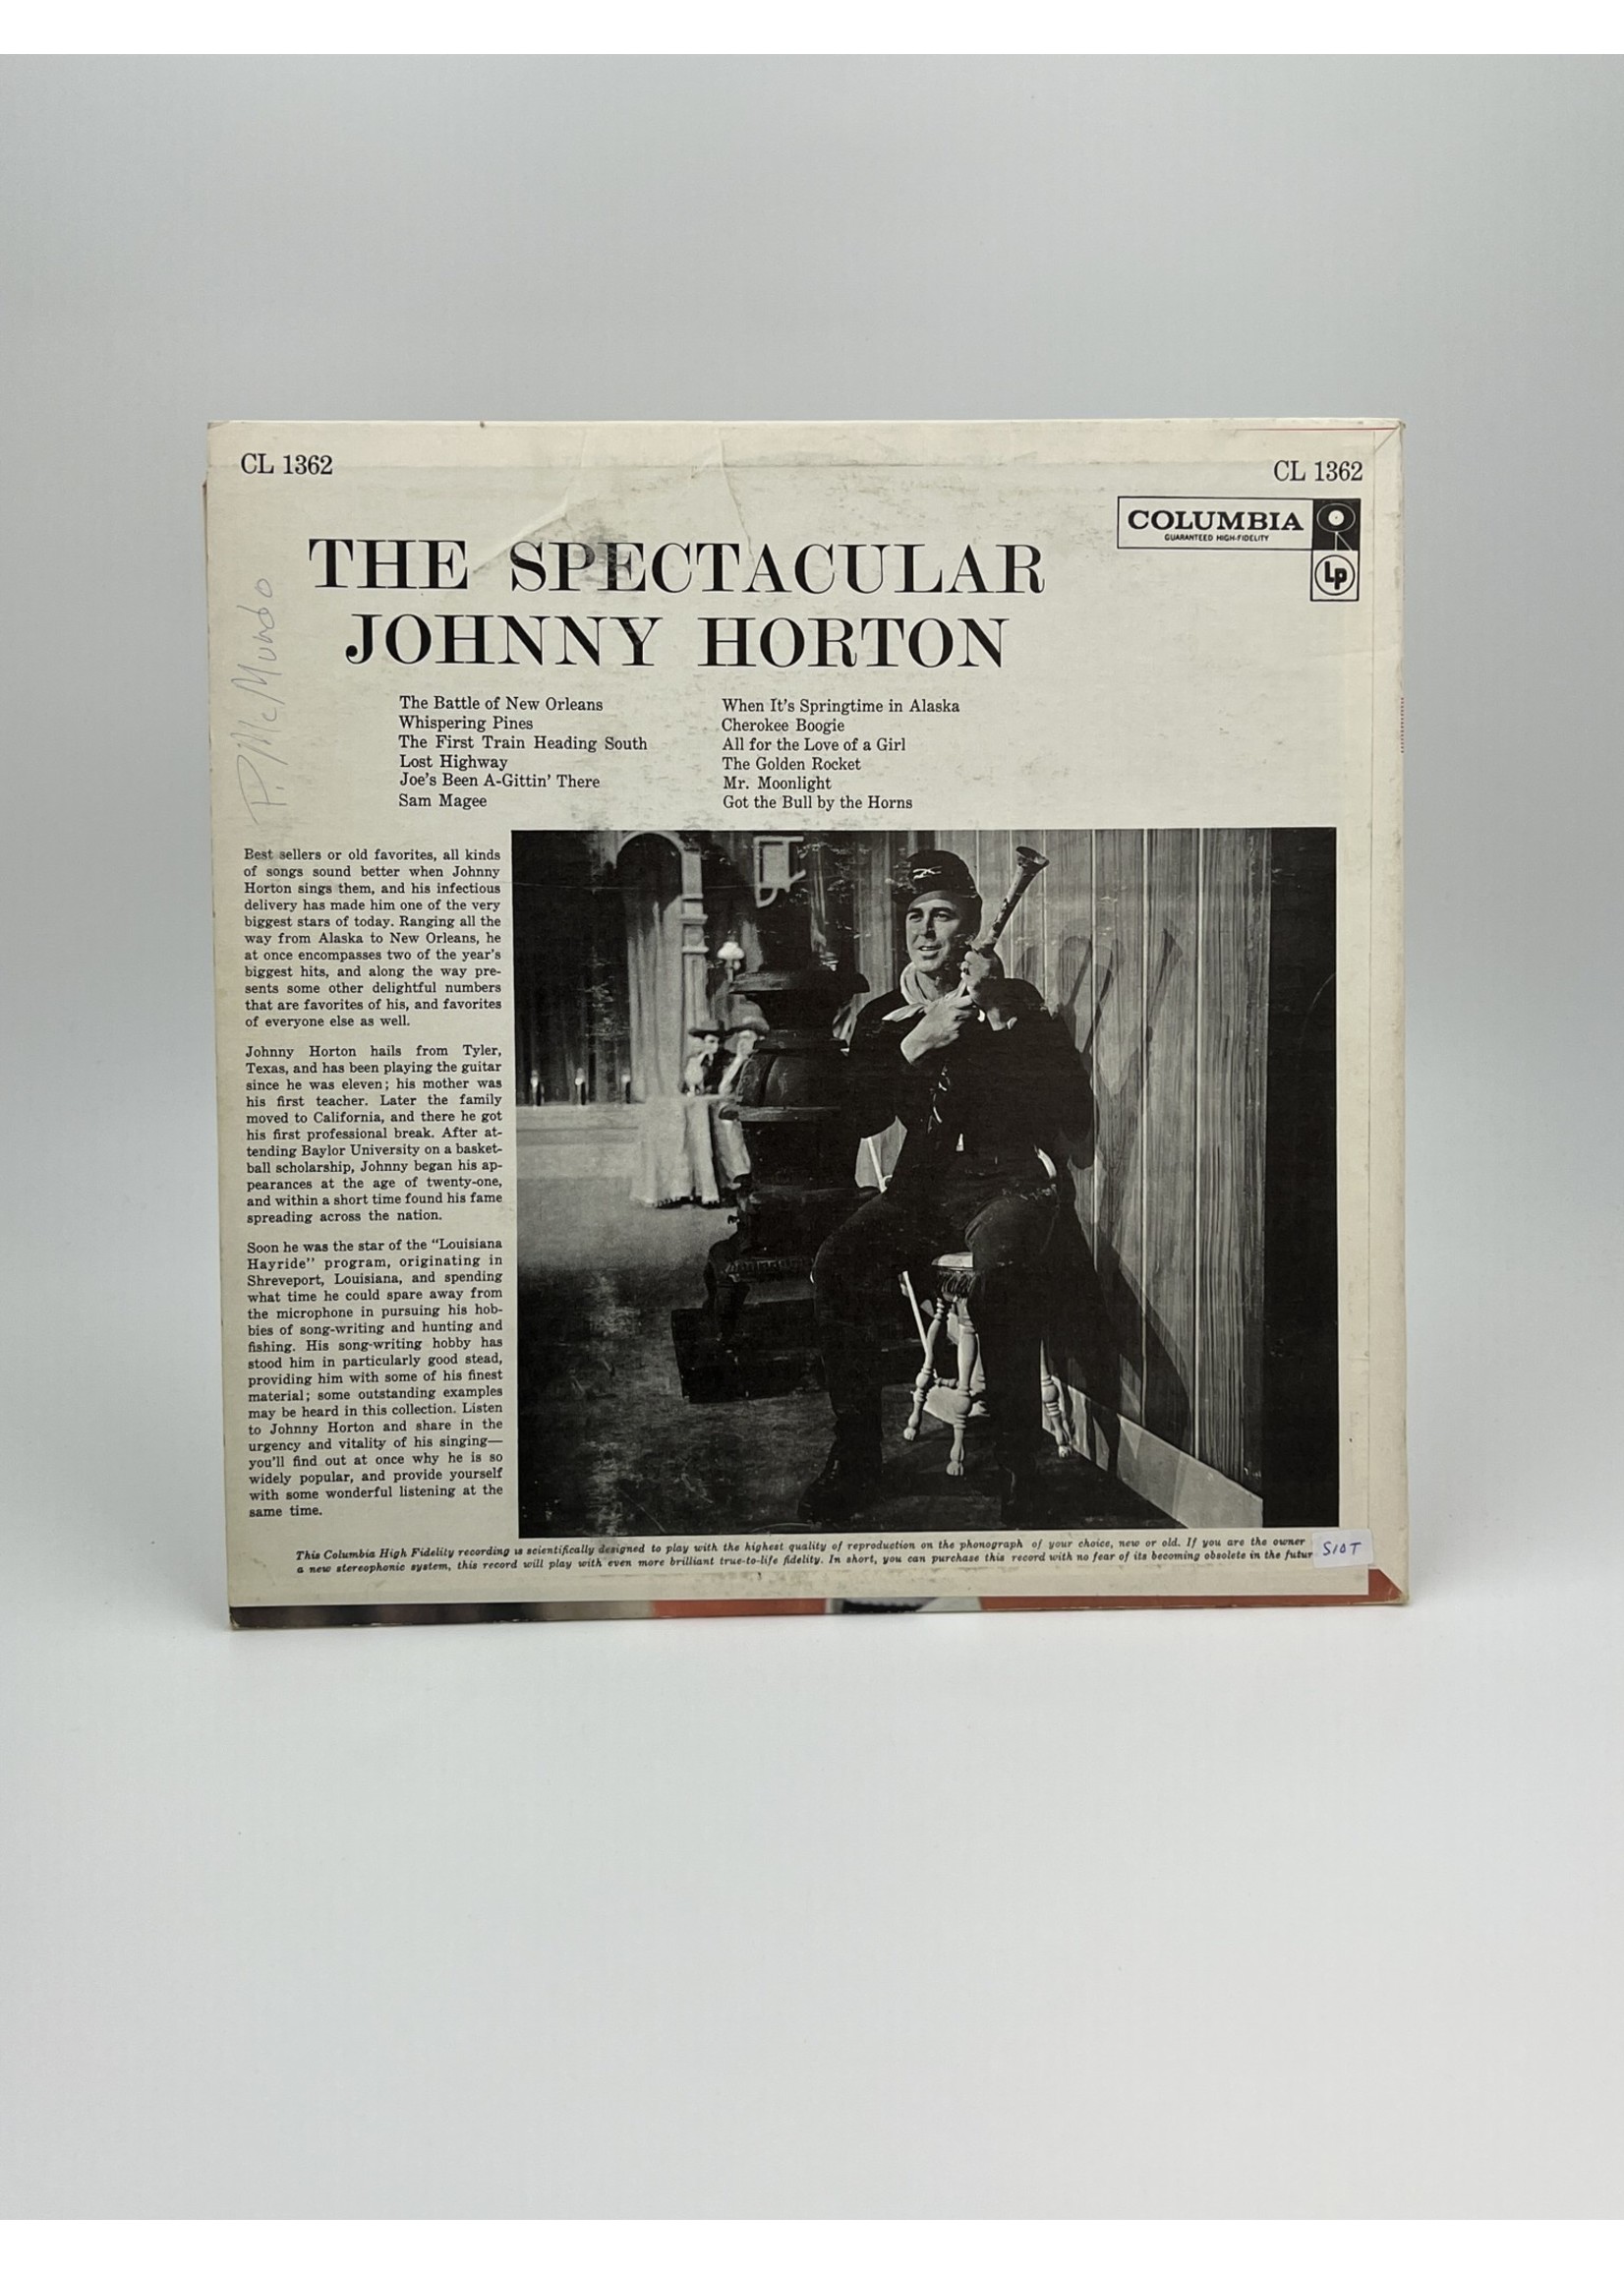 LP The Spectacular Johnny Horton LP Record